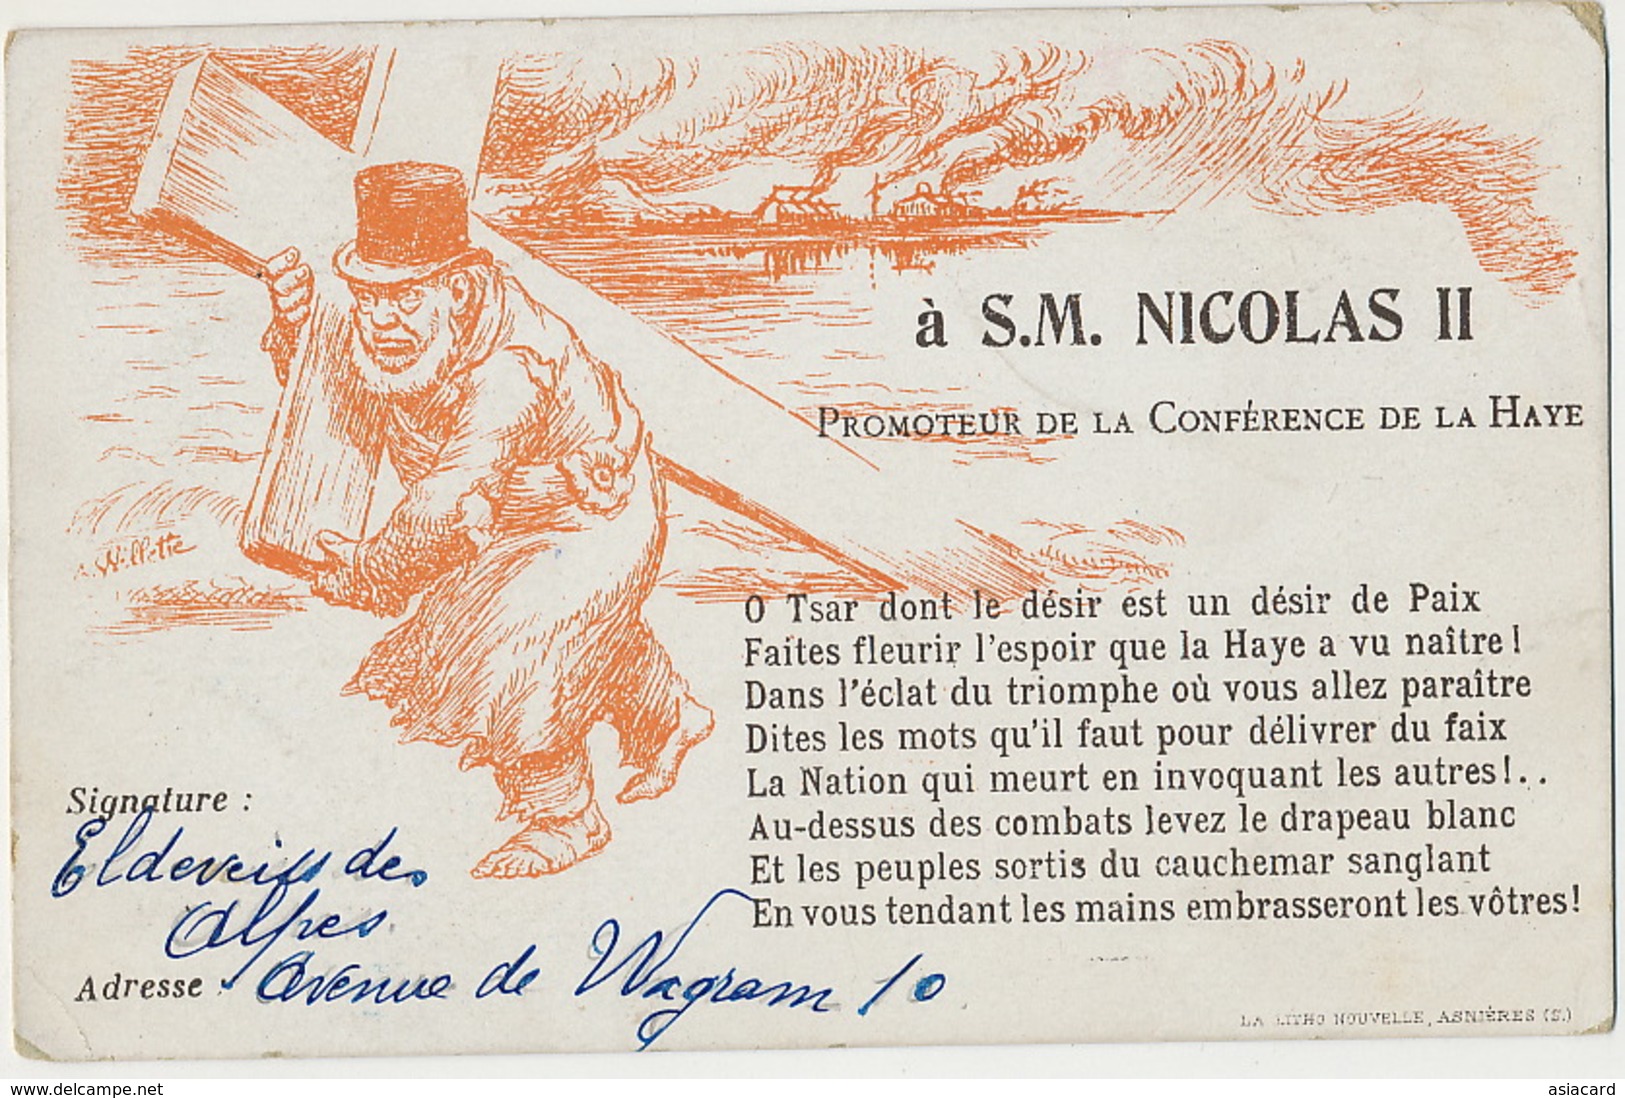 Boer War Kruger Writting To Czar Nicolas II The Hague Conference Promotor Compiegne France Tsar Signée Willette - Afrique Du Sud